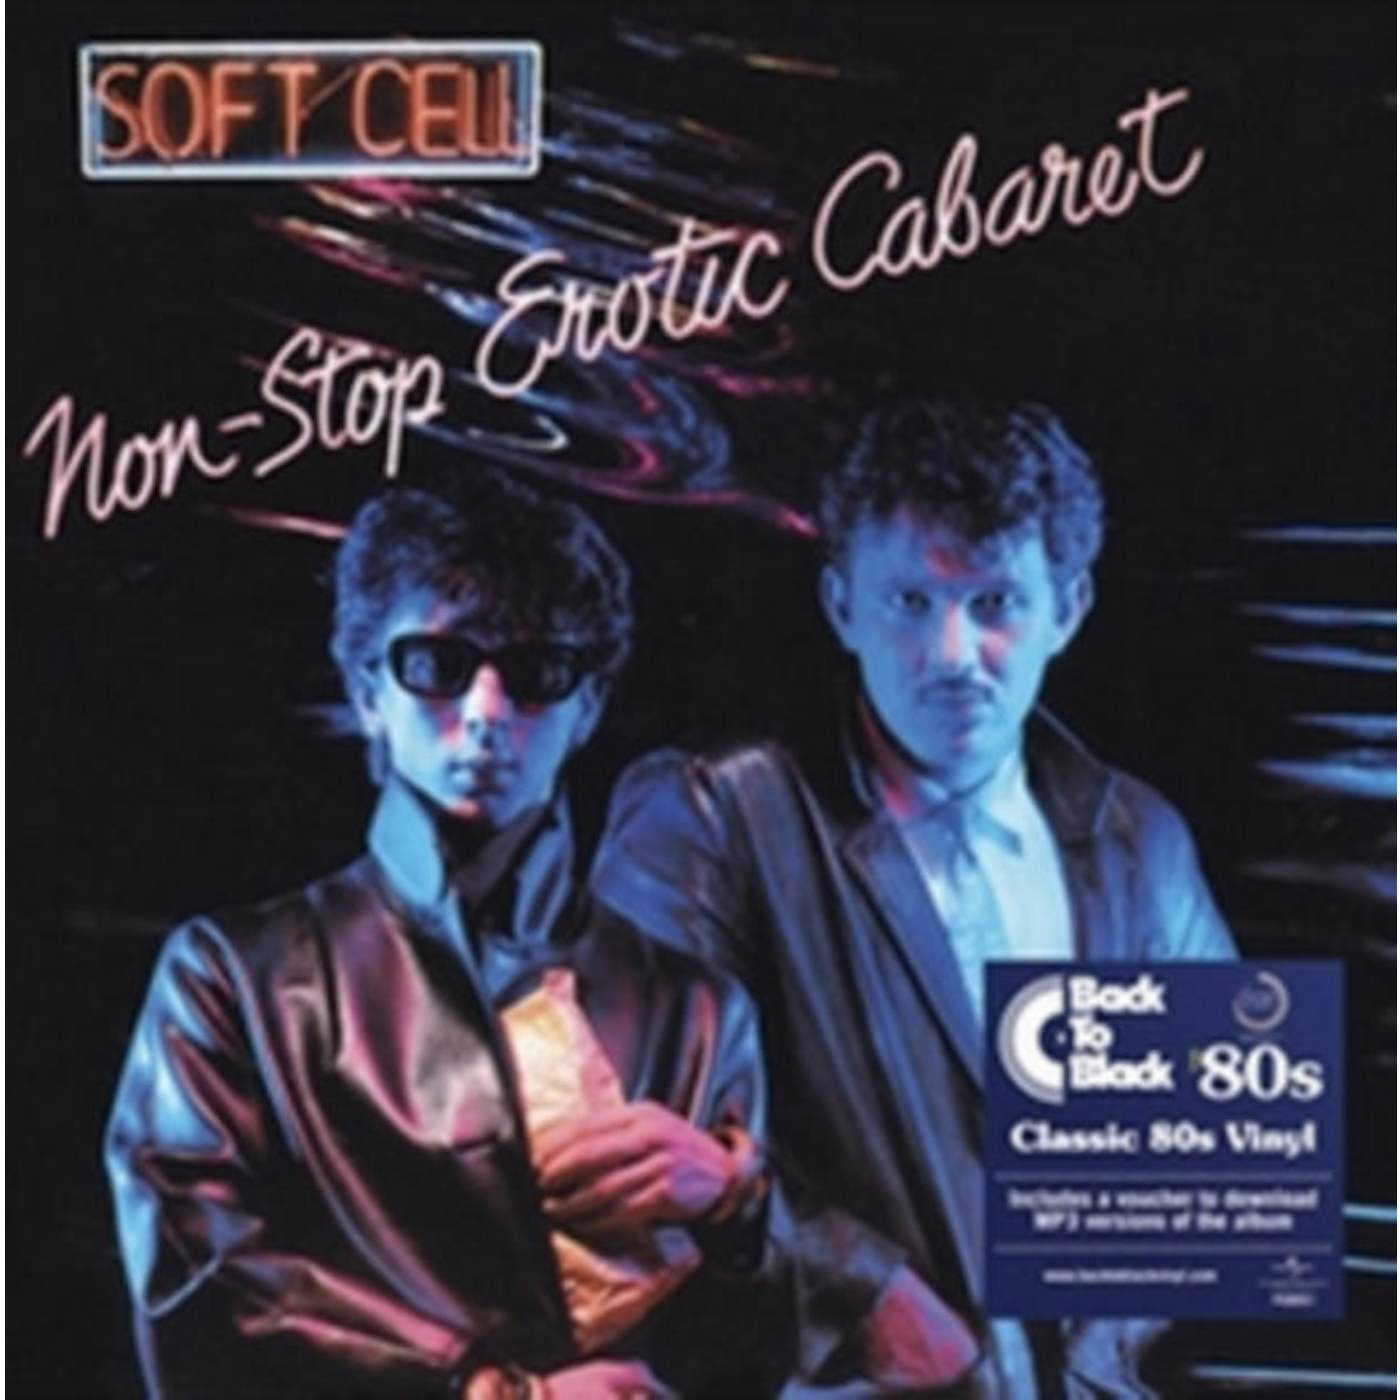 Soft Cell LP Vinyl Record - Non-Stop Erotic Cabaret